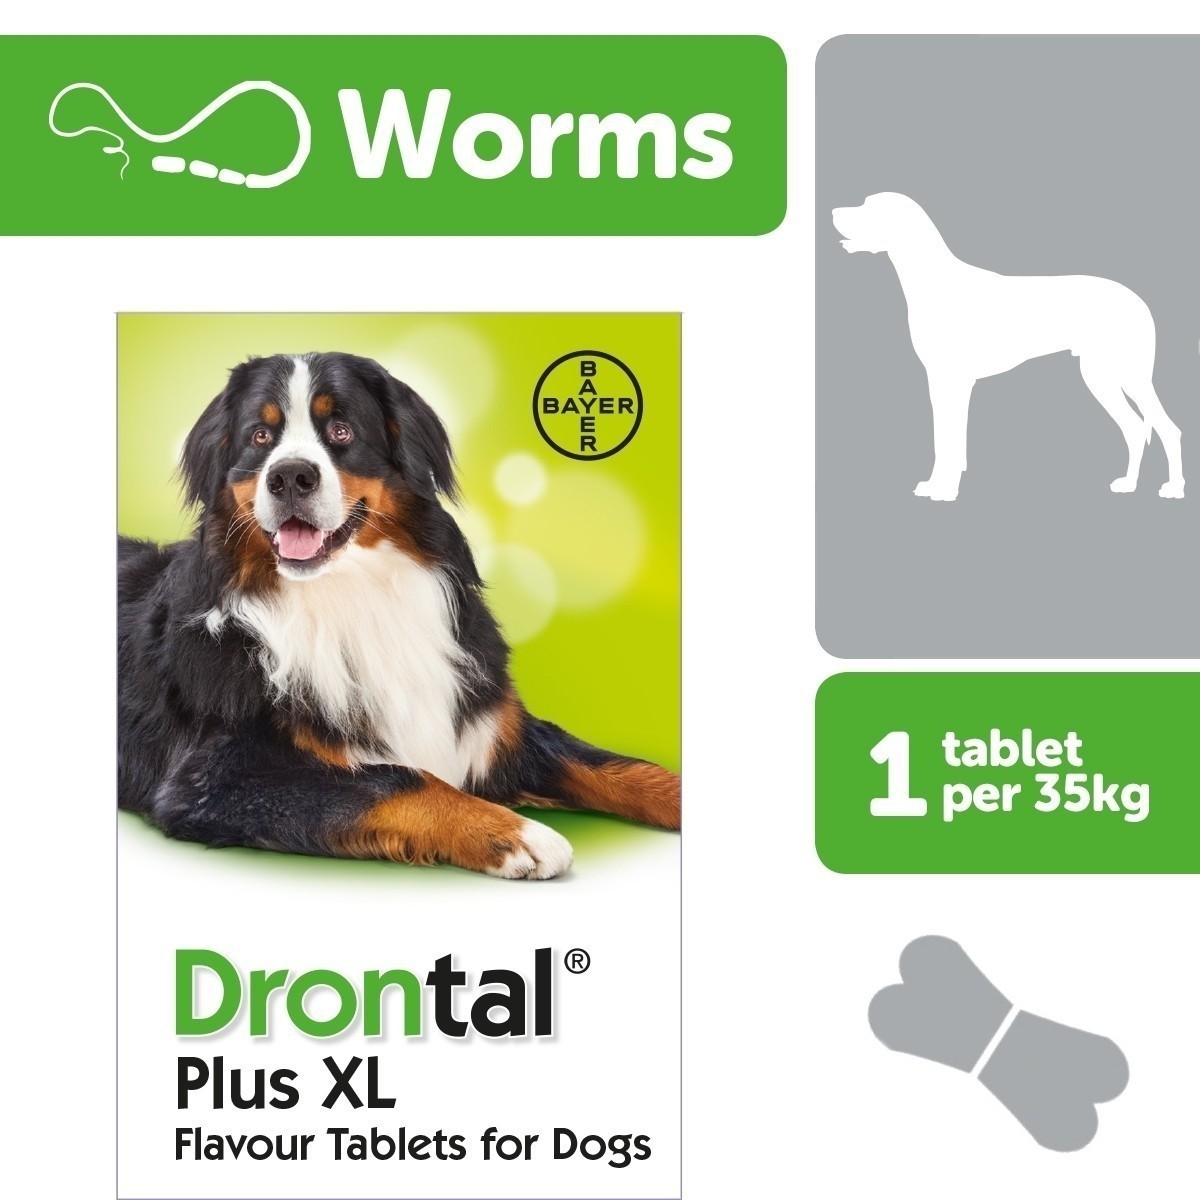 drontal dog wormer